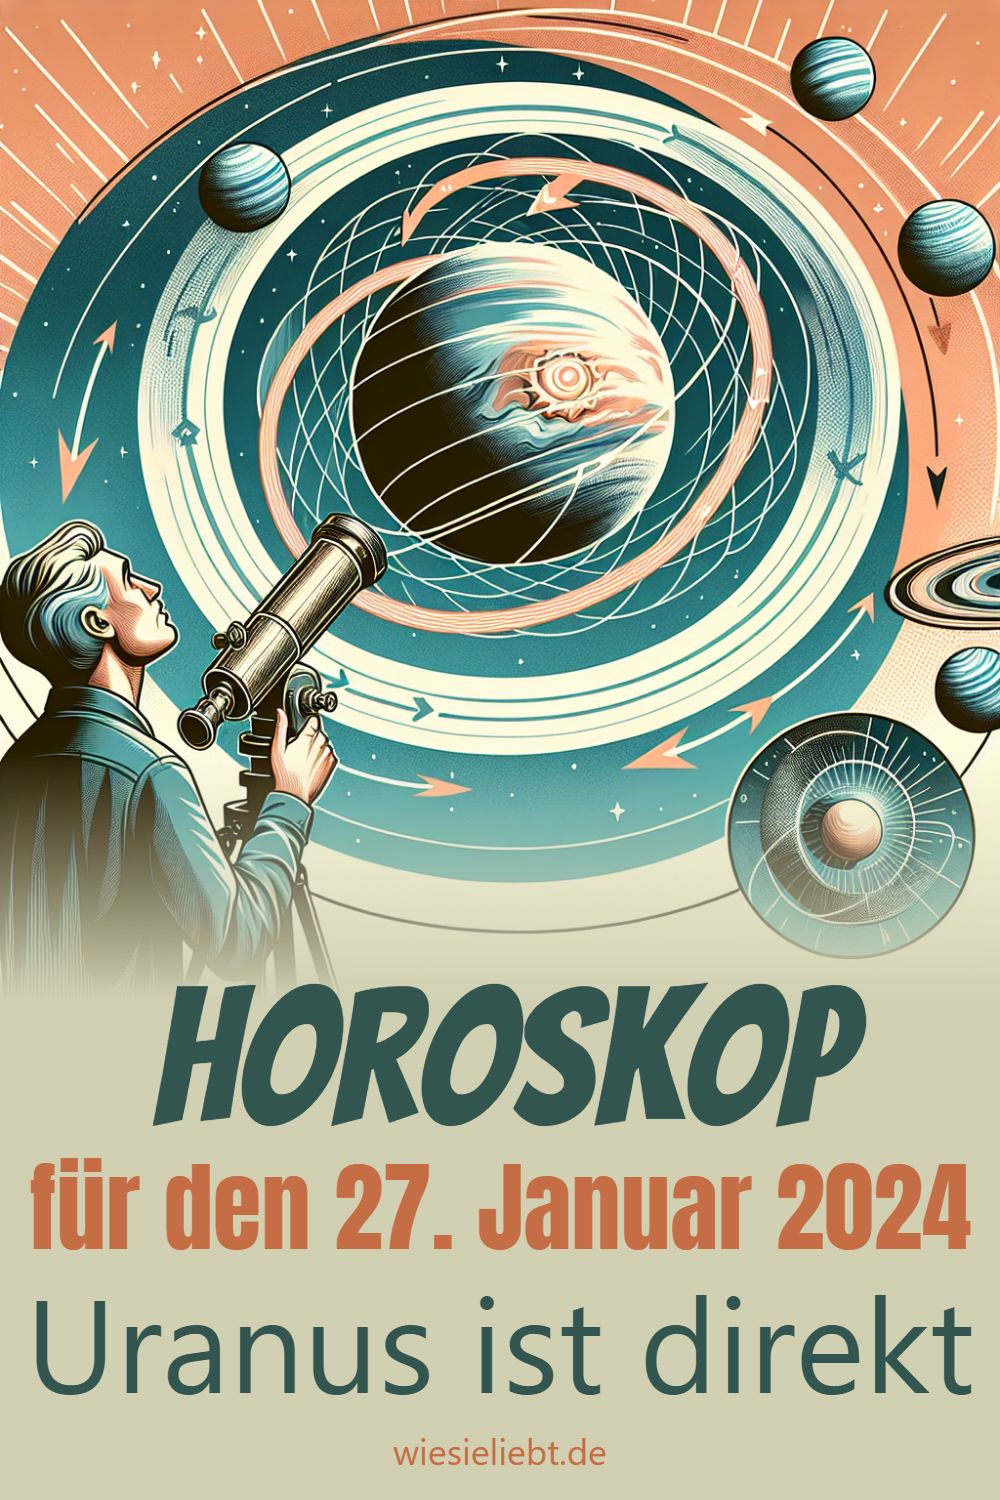 Horoskop für den 27. Januar 2024 Uranus ist direkt